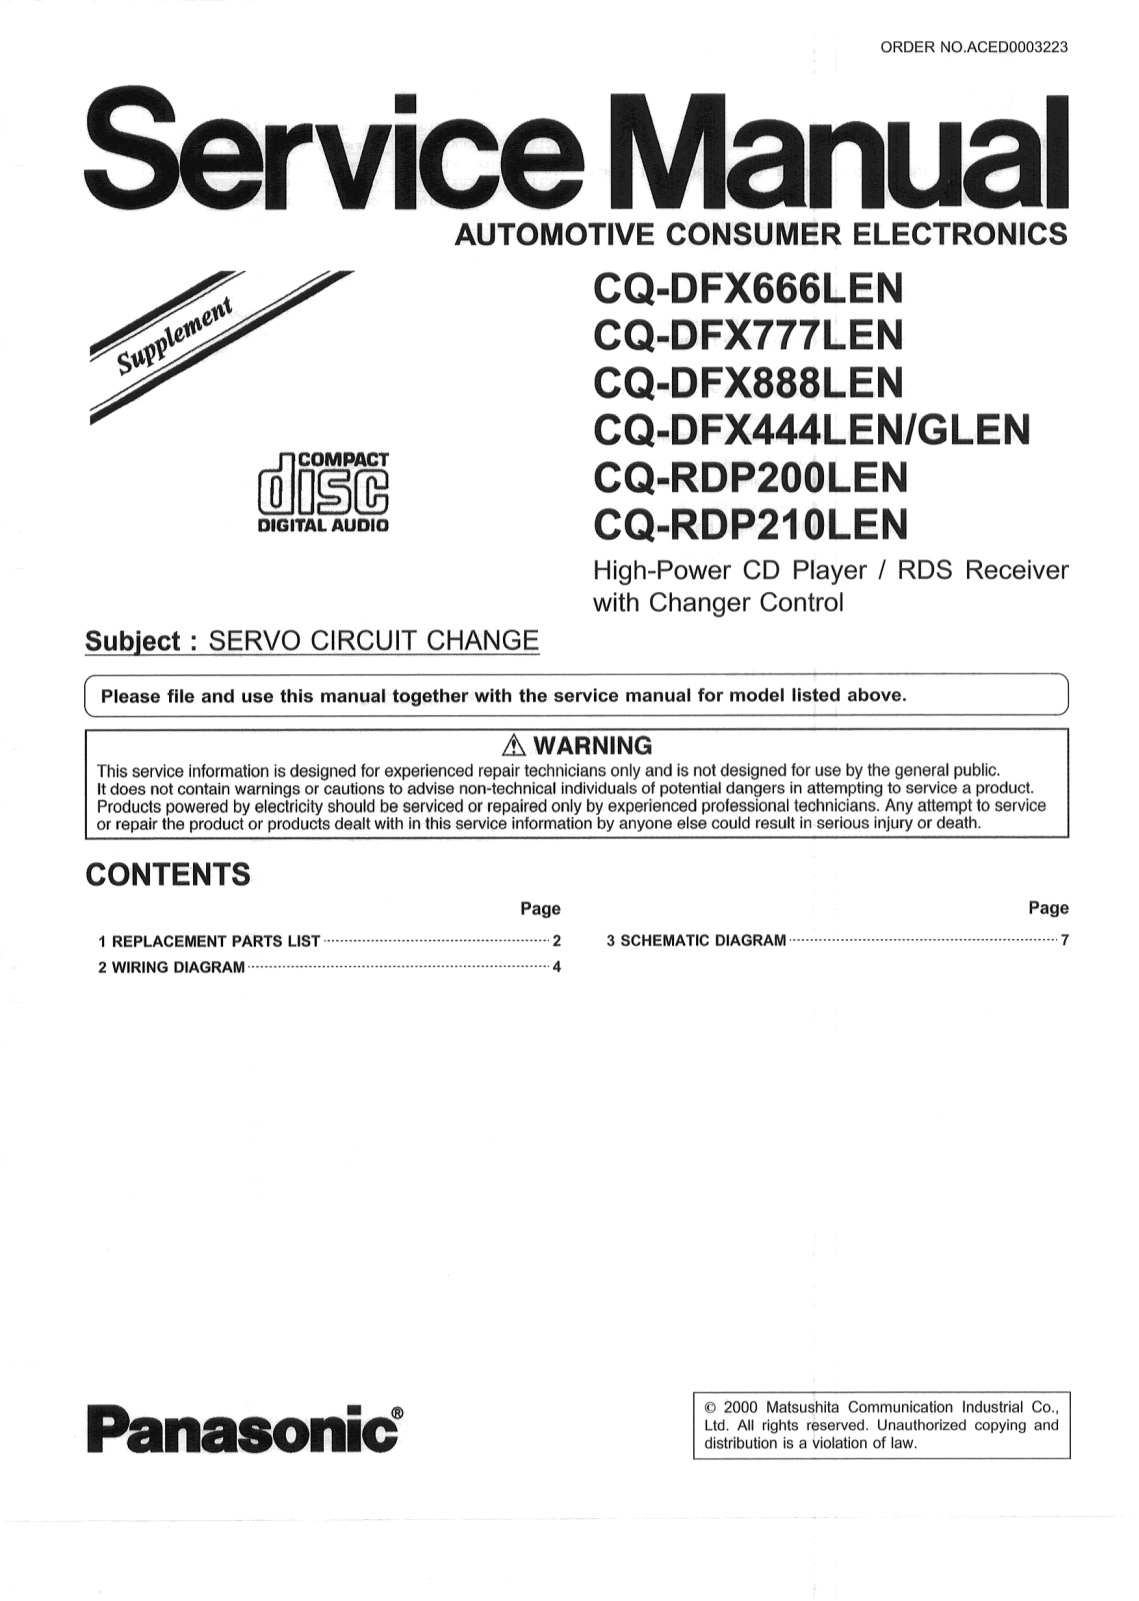 Panasonic CQDFX-444-GLEN, CQDFX-666-LEN, CQDFX-444-LEN, CQDFX-777-LEN, CQDFX-888-LEN Service manual